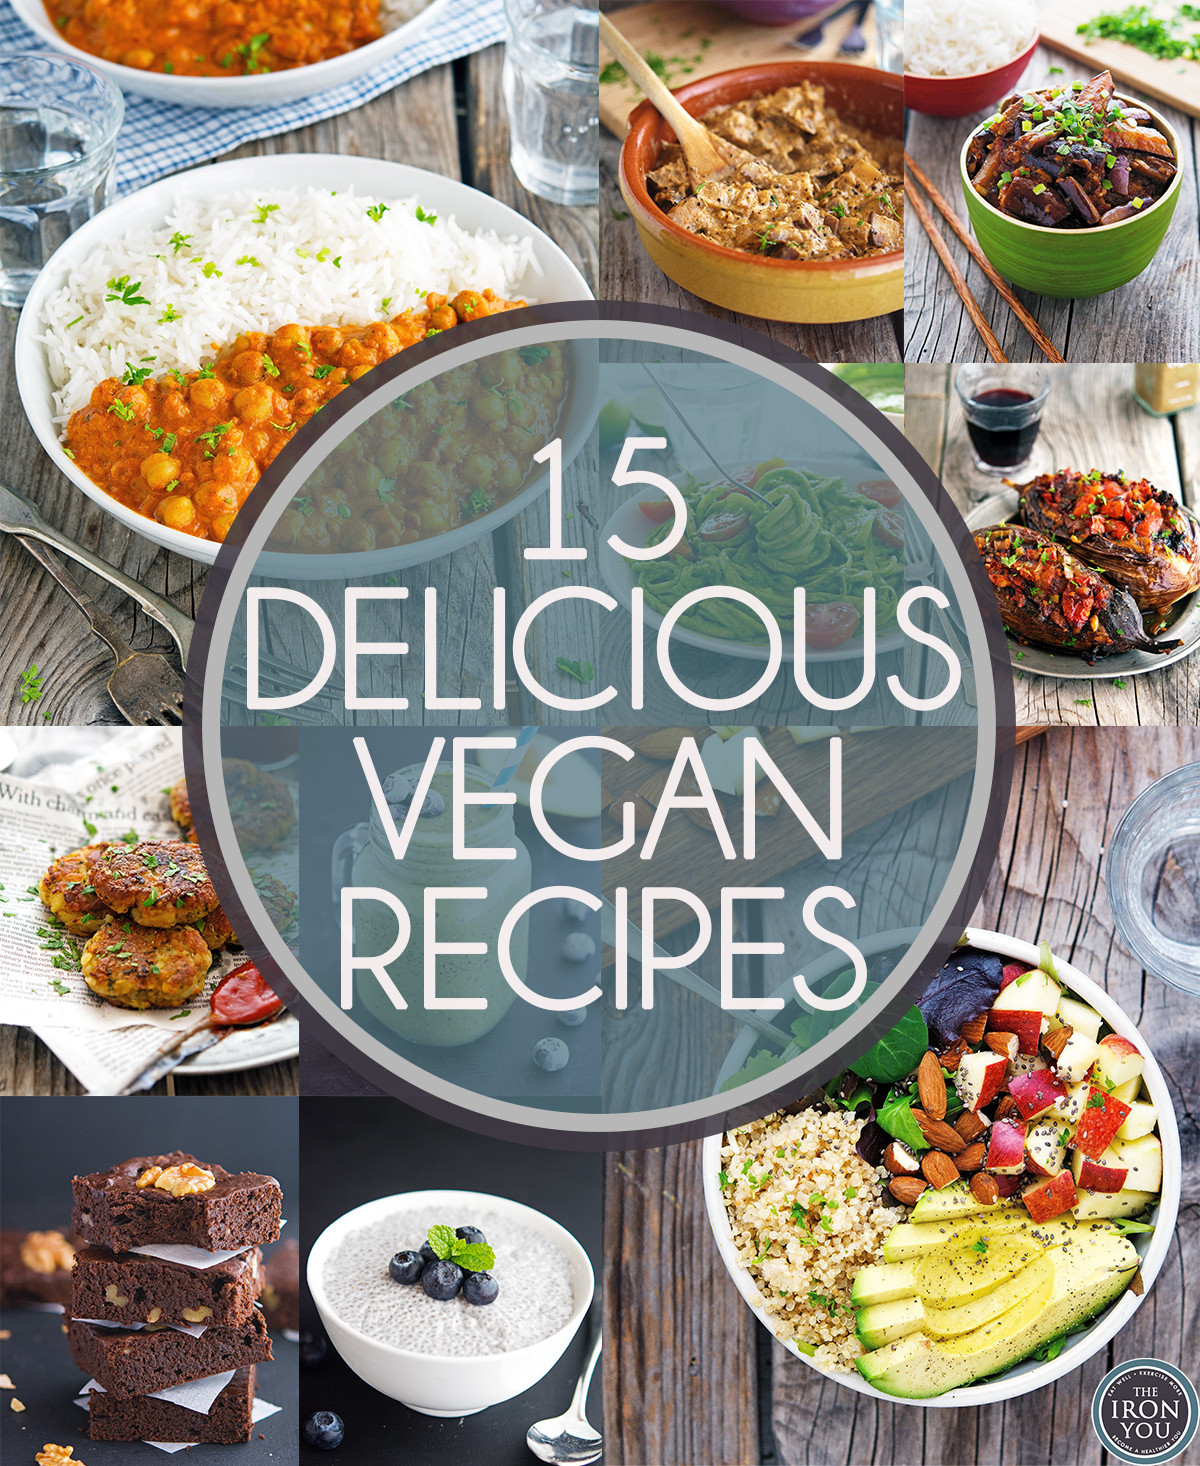 Yummy Vegetarian Recipes
 The Iron You 15 Delicious Vegan Recipes